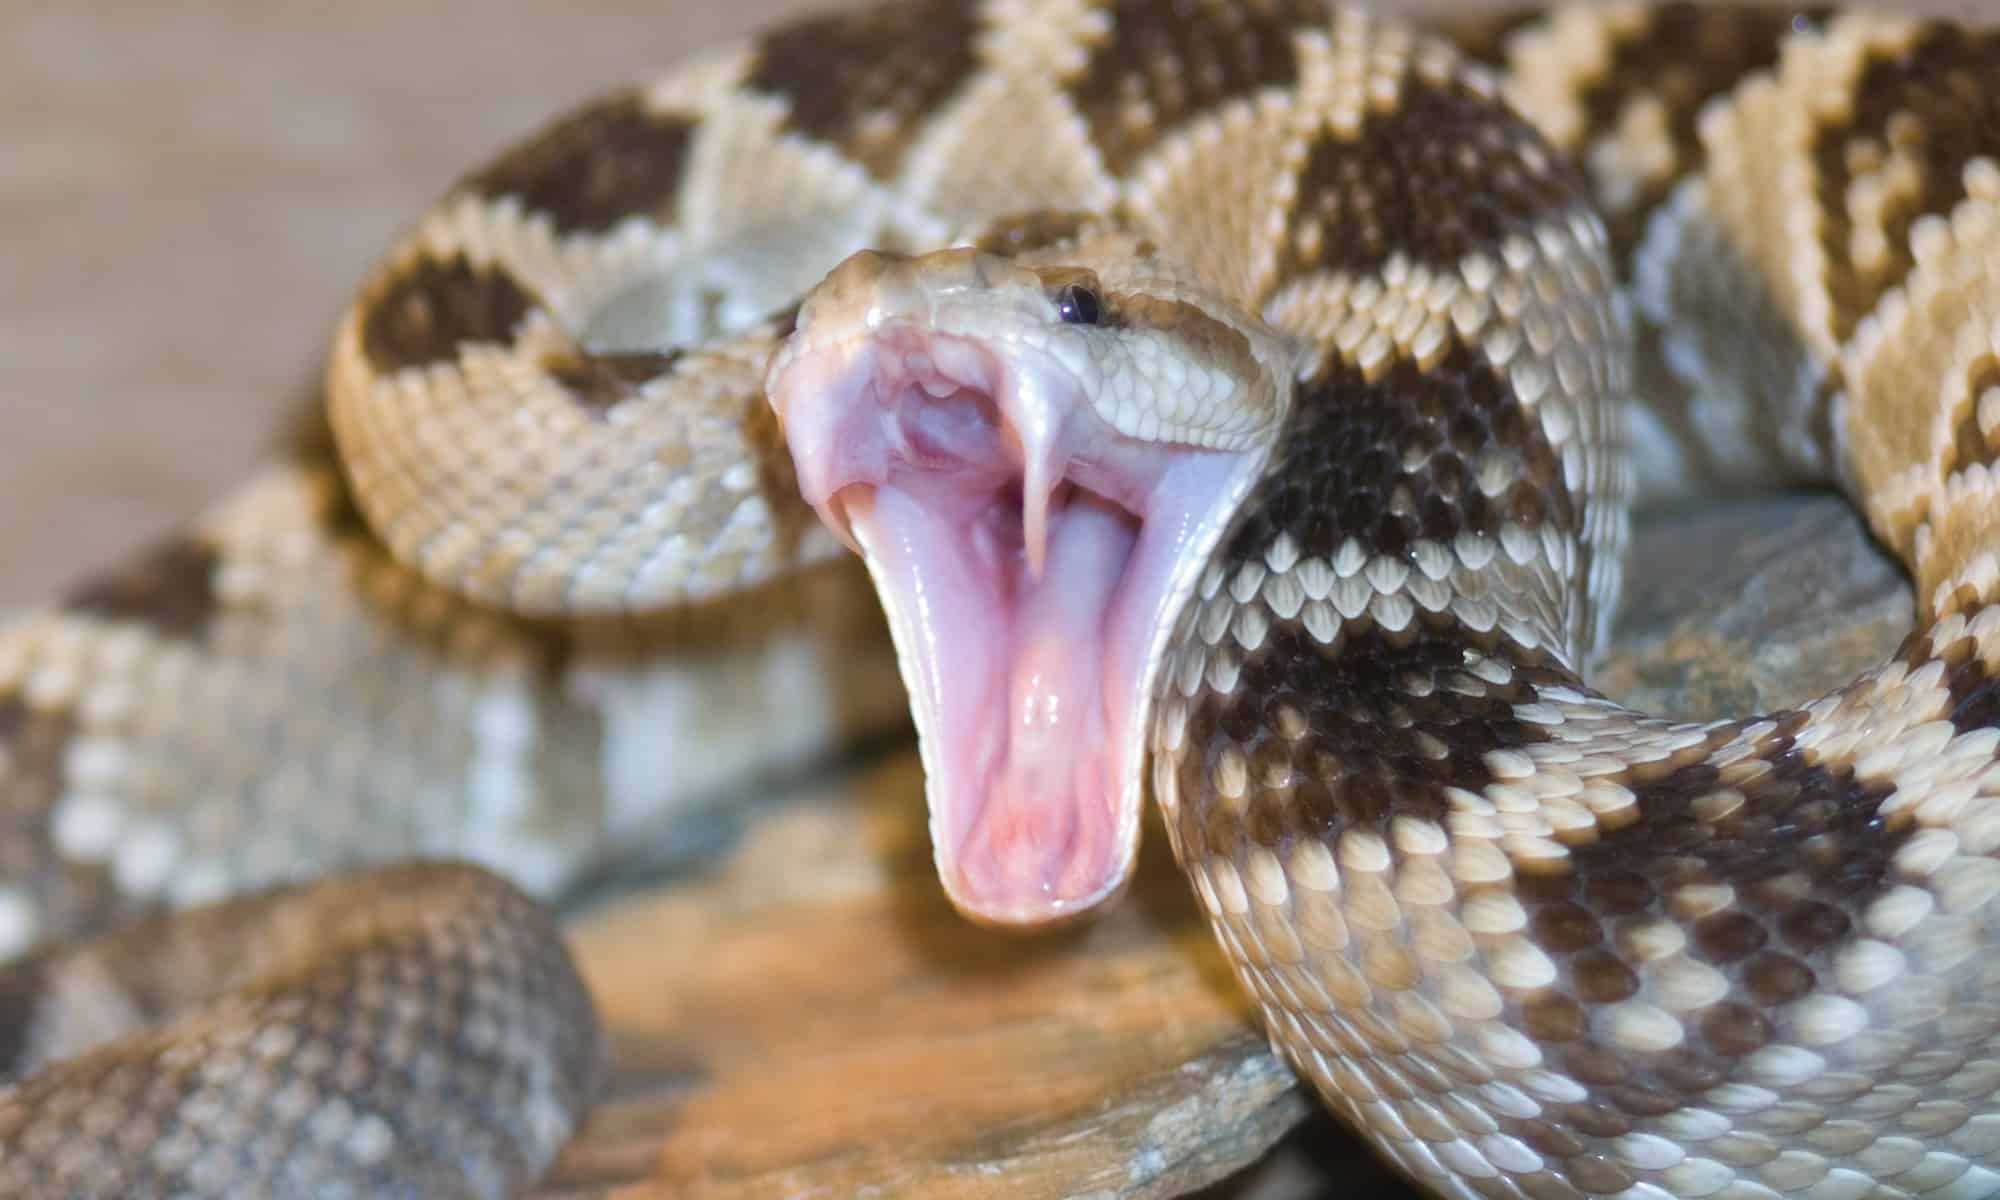 How Many Teeth Do Rattlesnakes Have?